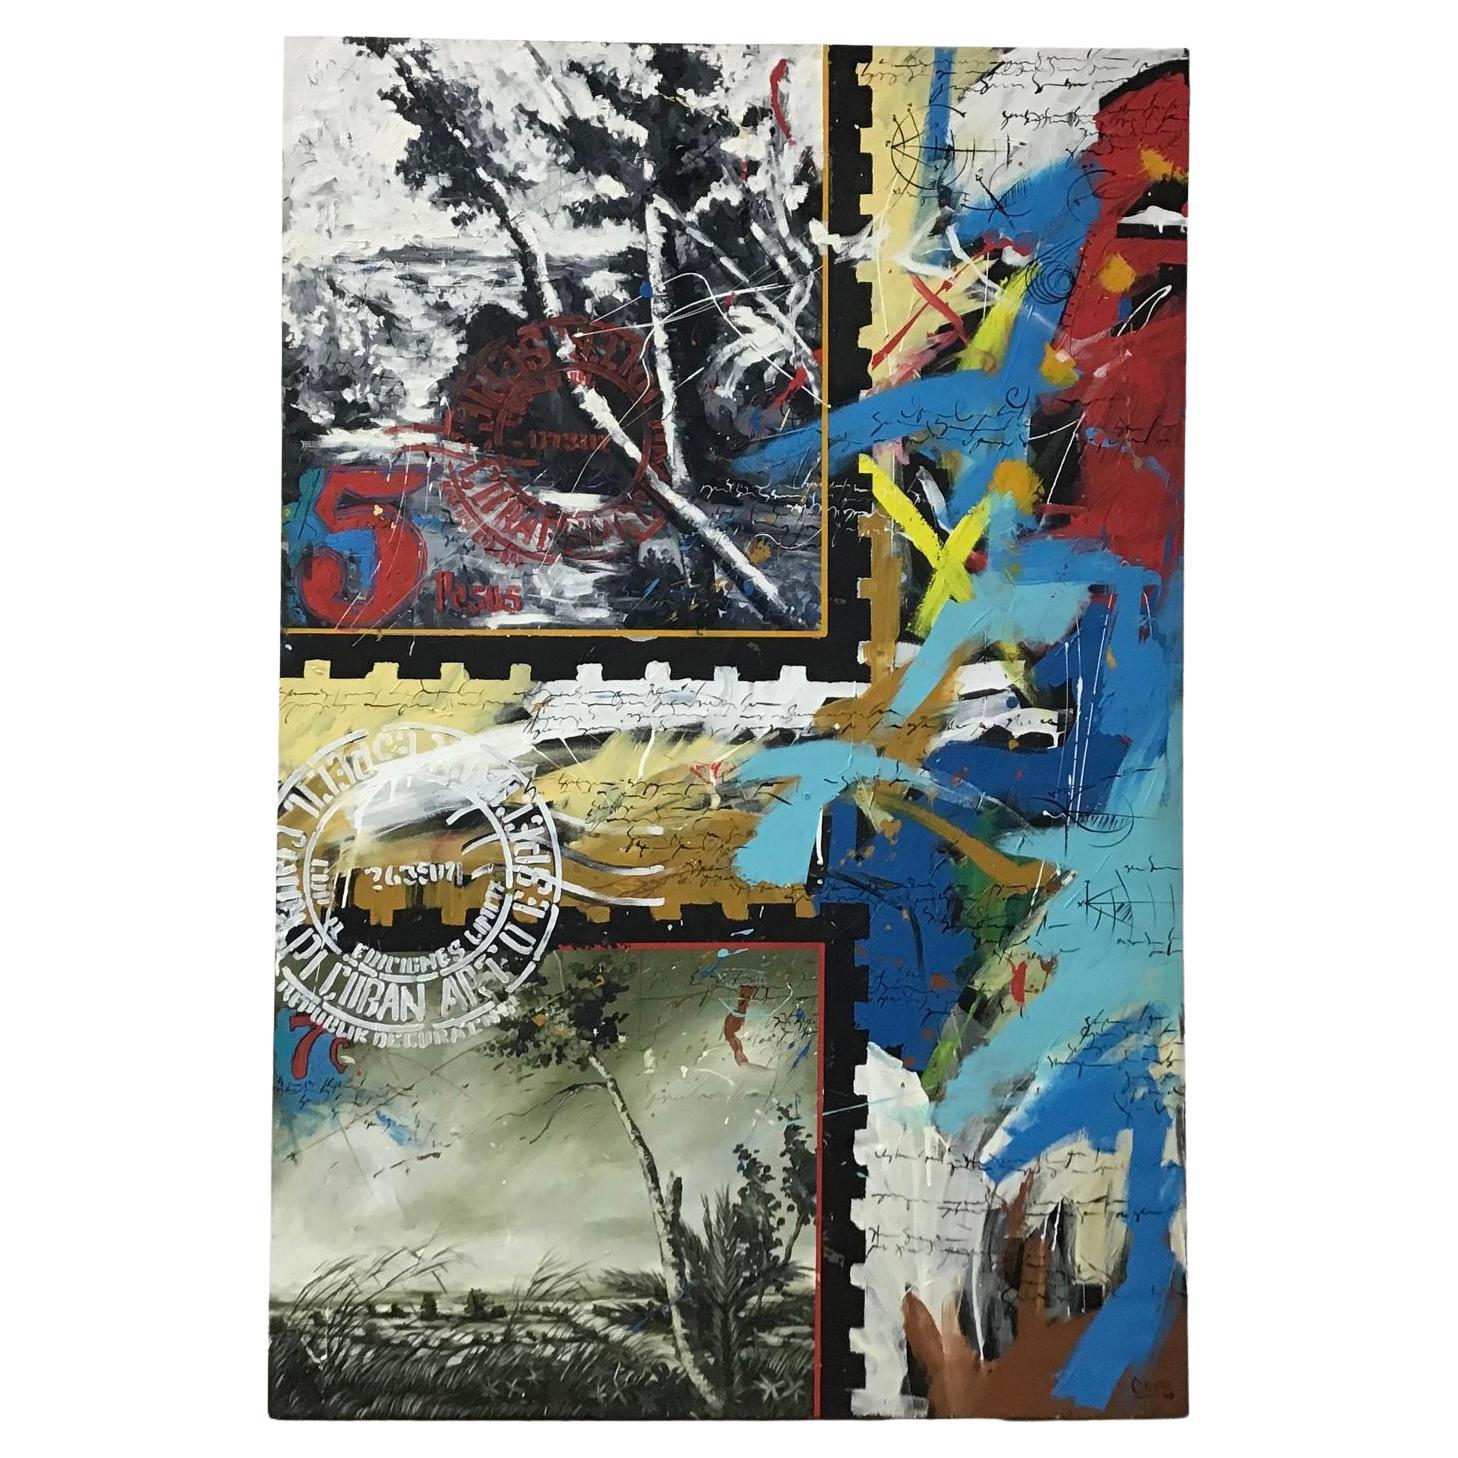 Gran óleo abstracto sobre lienzo firmado por artista cubano